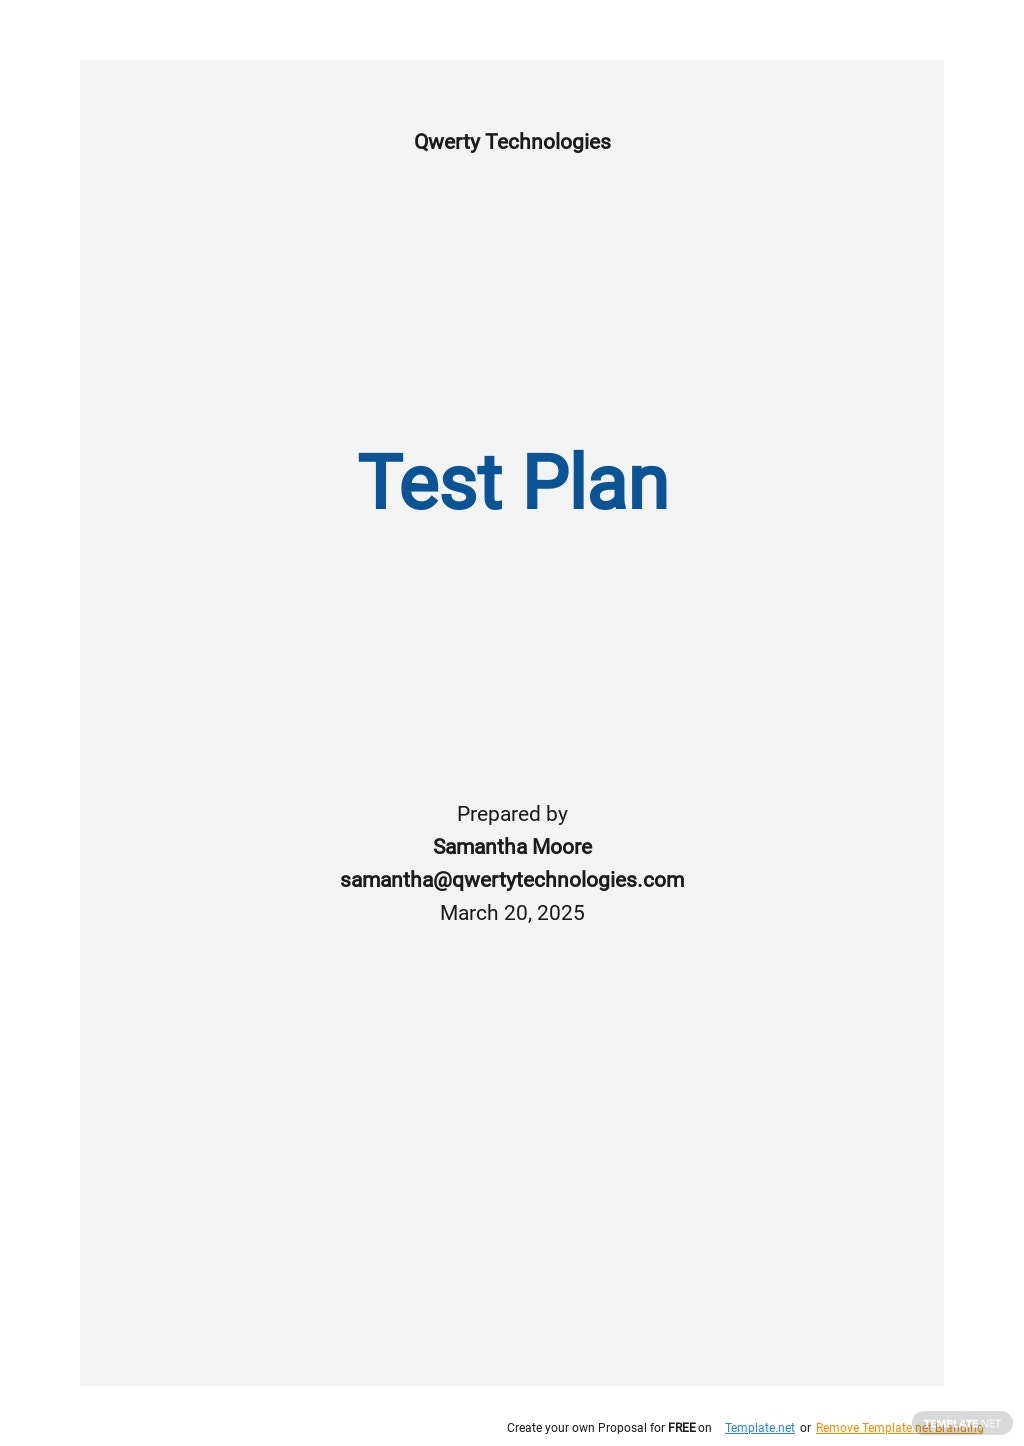 test plan template